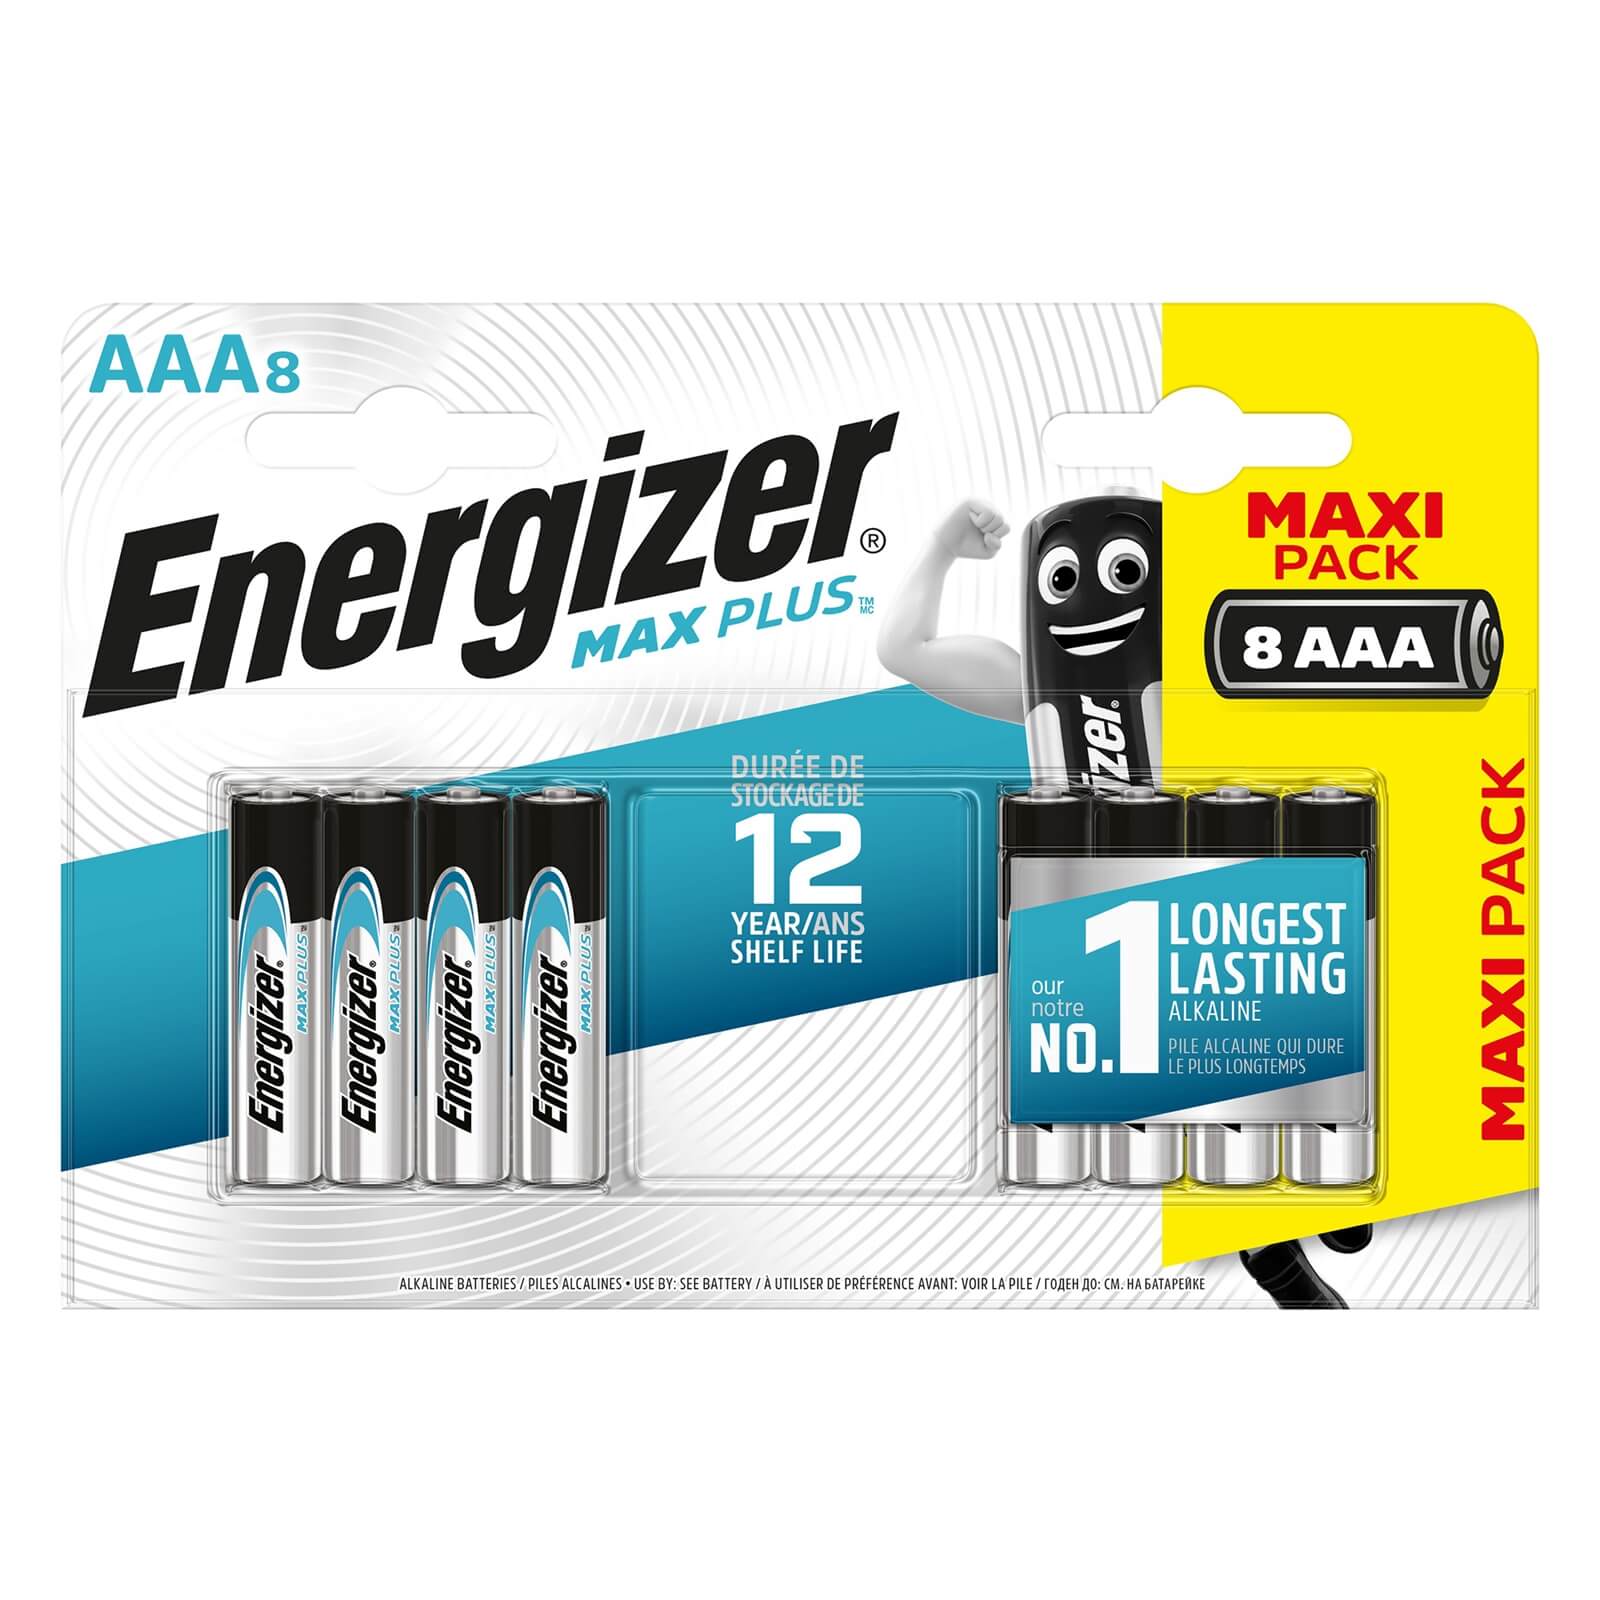 Photo of Energizer Max Plus Alkaline Aaa Batteries - 8 Pack